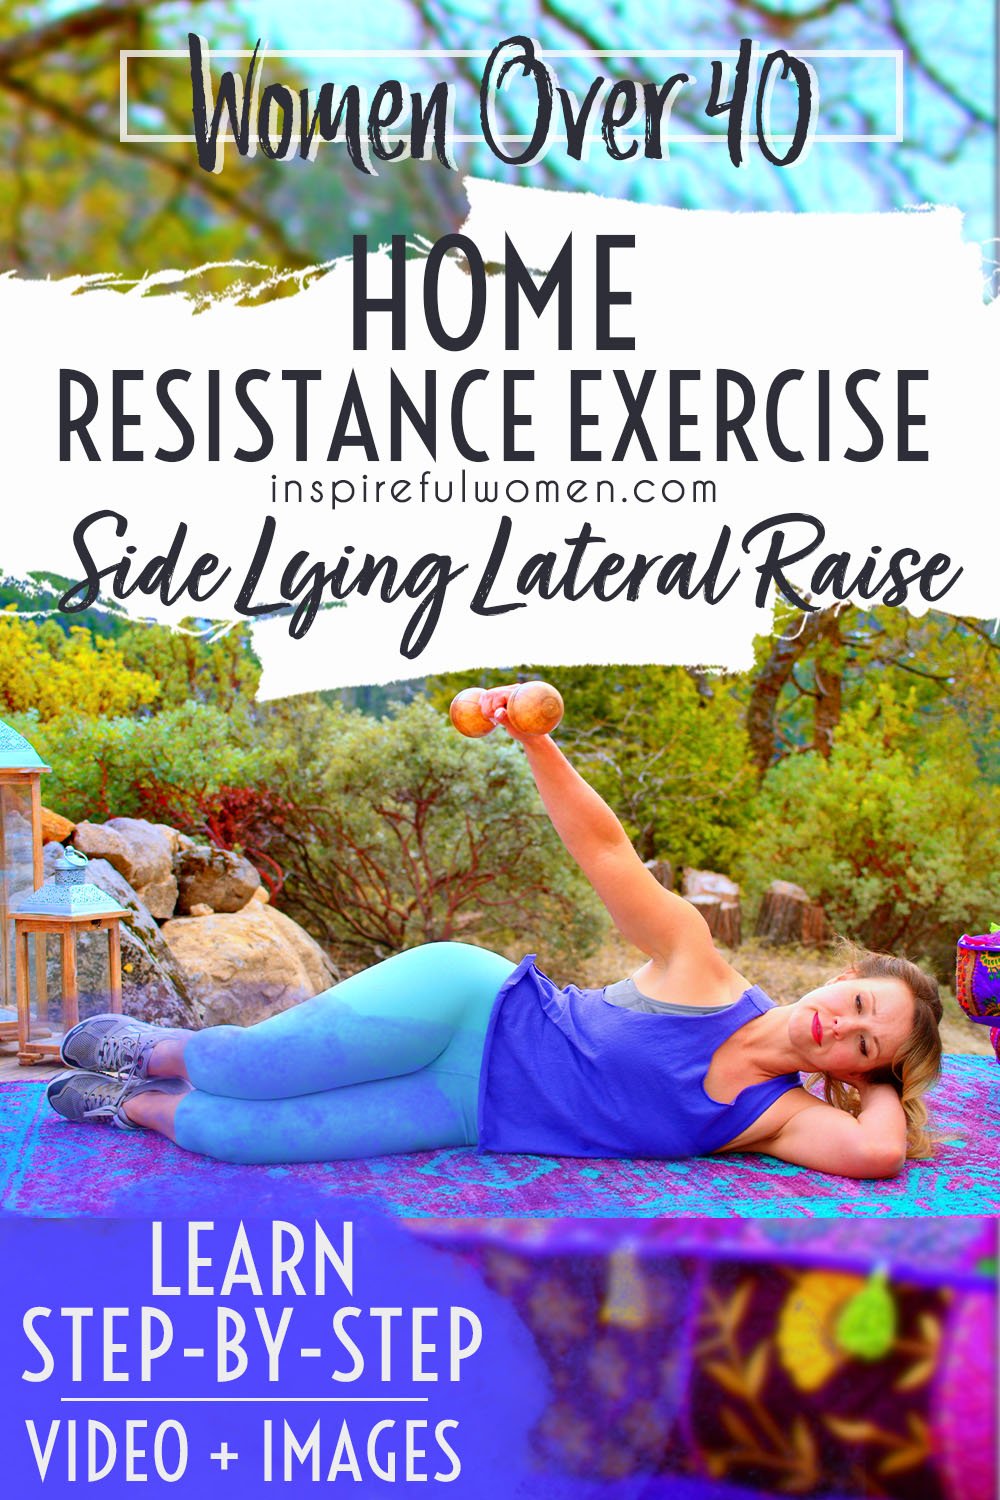 side-lying-lateral-raise-dumbbell-shoulder-home-resistance-exercise-women-over-40